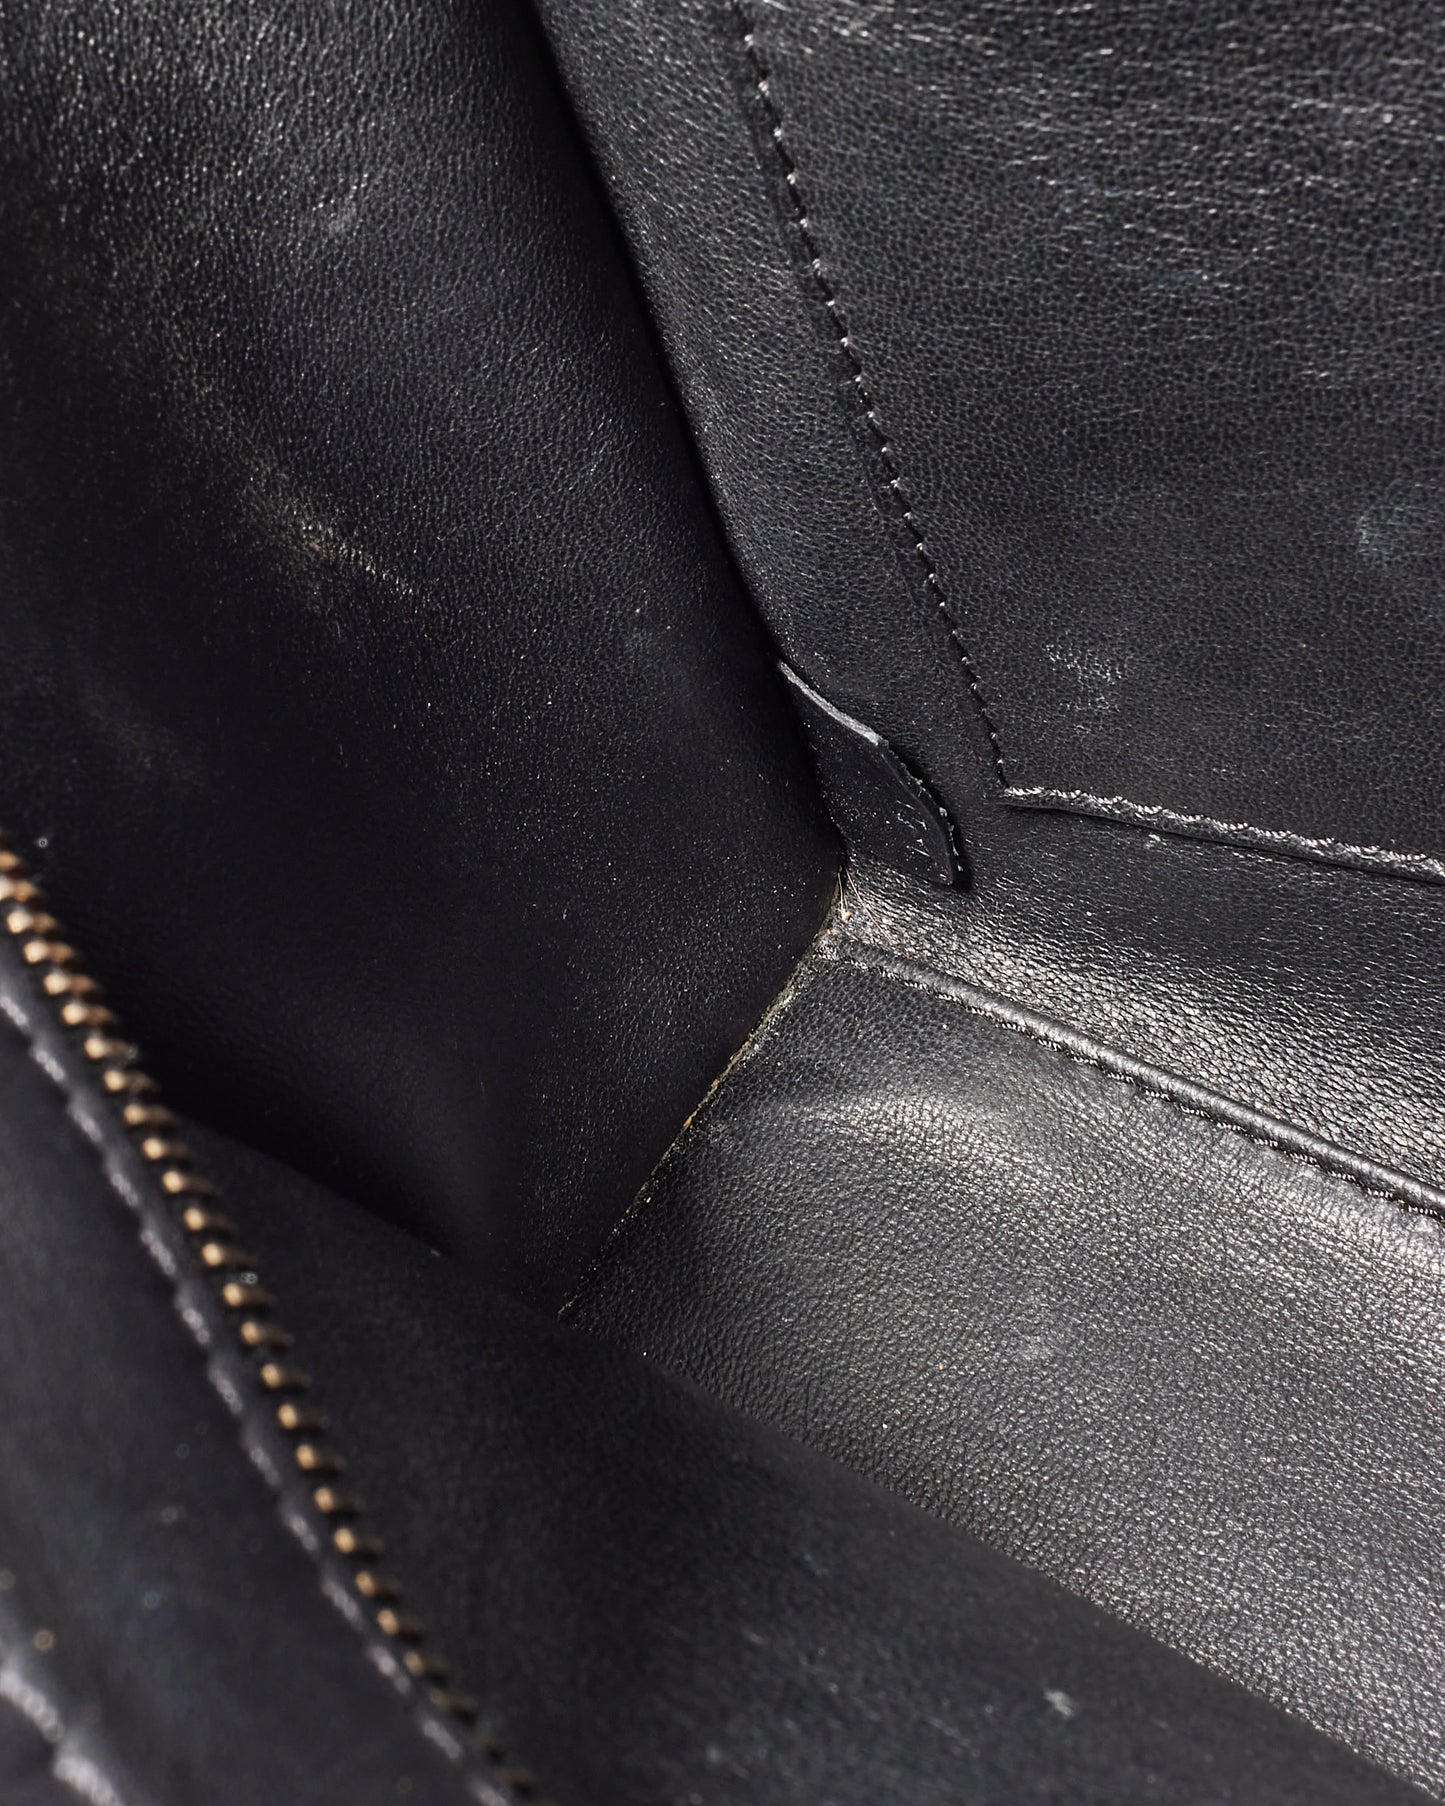 Celine Tri-Color Beige/Black/White Leather Nano Luggage Bag